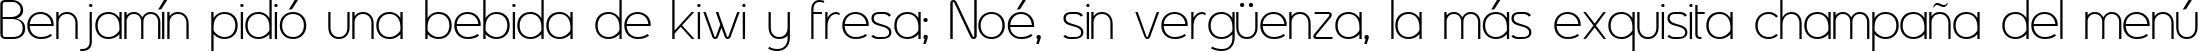 Пример написания шрифтом Asenine текста на испанском